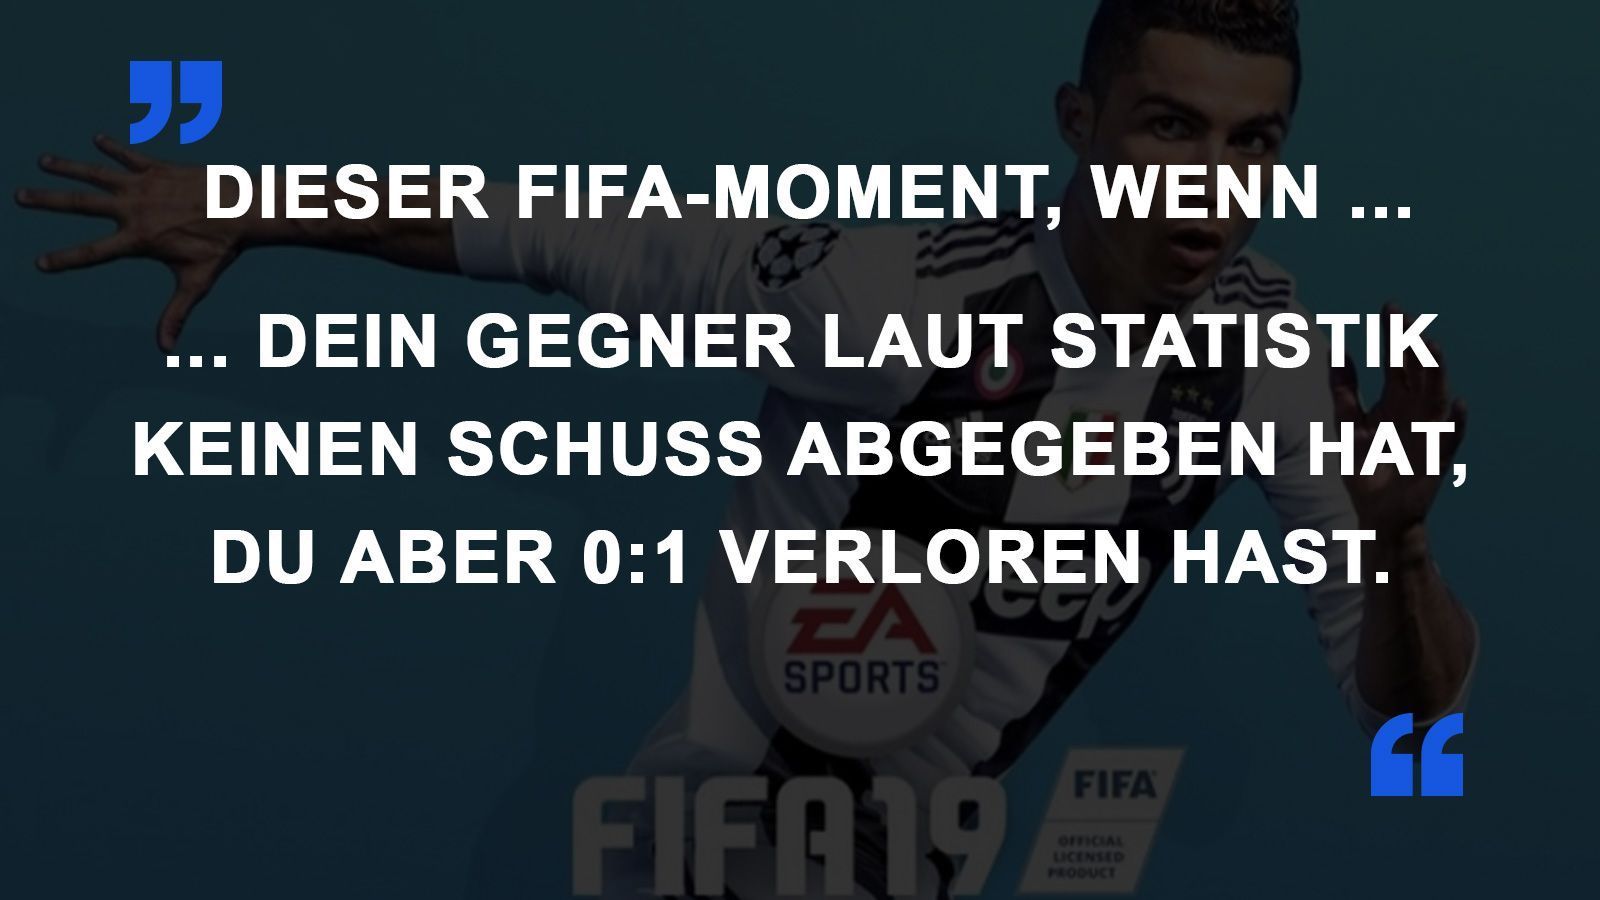 
                <strong>FIFA Momente Statistik</strong><br>
                
              